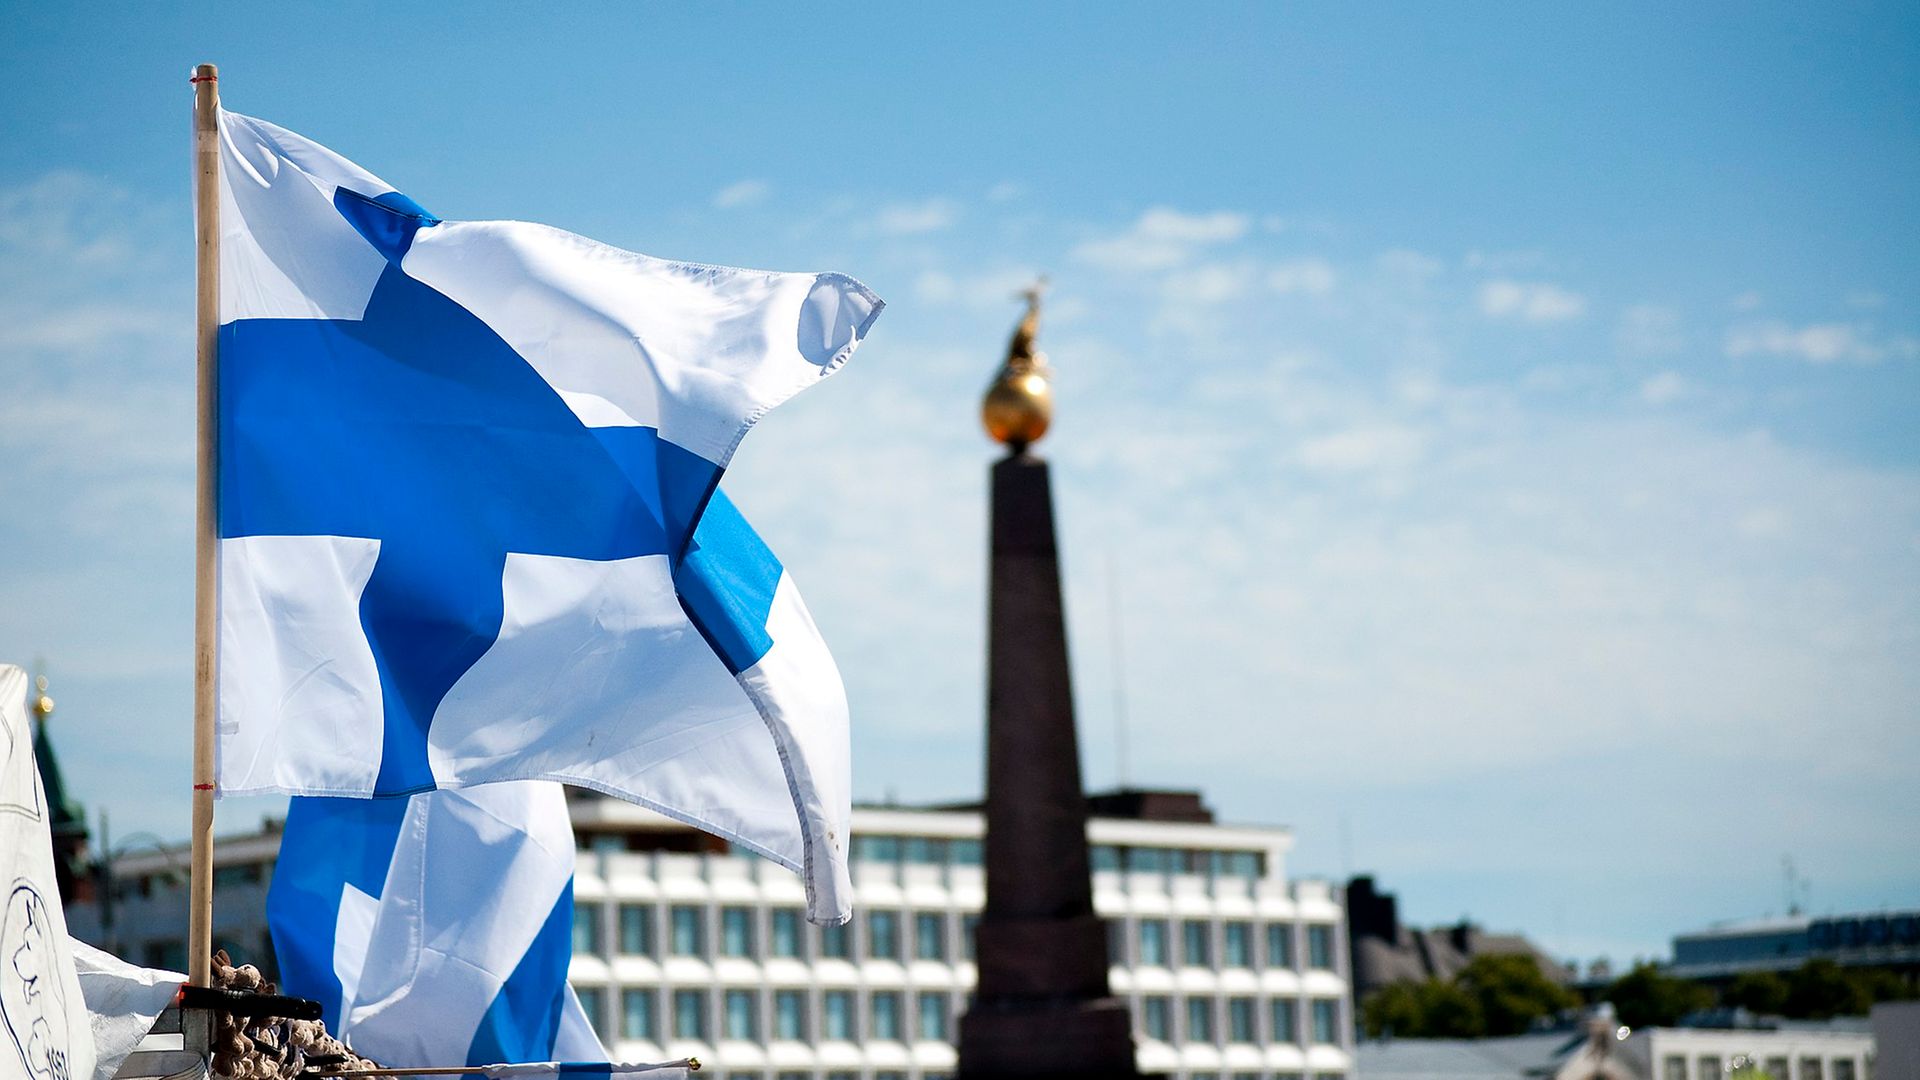 The flag of Finland flies in Helsinki - Credit: CGP Grey/Wikipedia